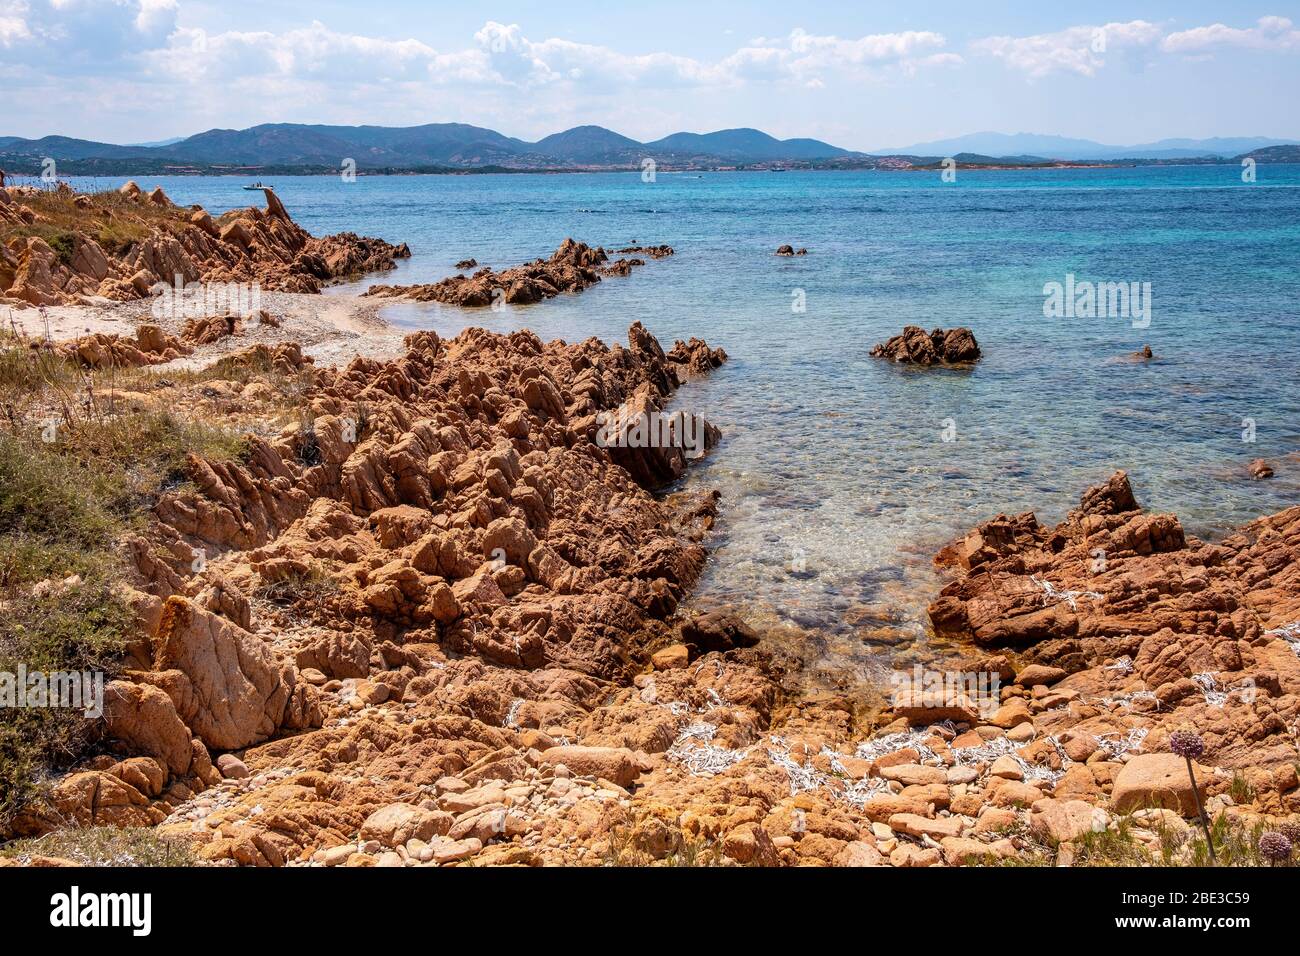 Panoramic view of Spalmatore di Terra peninsula of Marine Protected Area reserve with seashore rocks of Isola Tavolara island on Tyrrhenian Sea Stock Photo